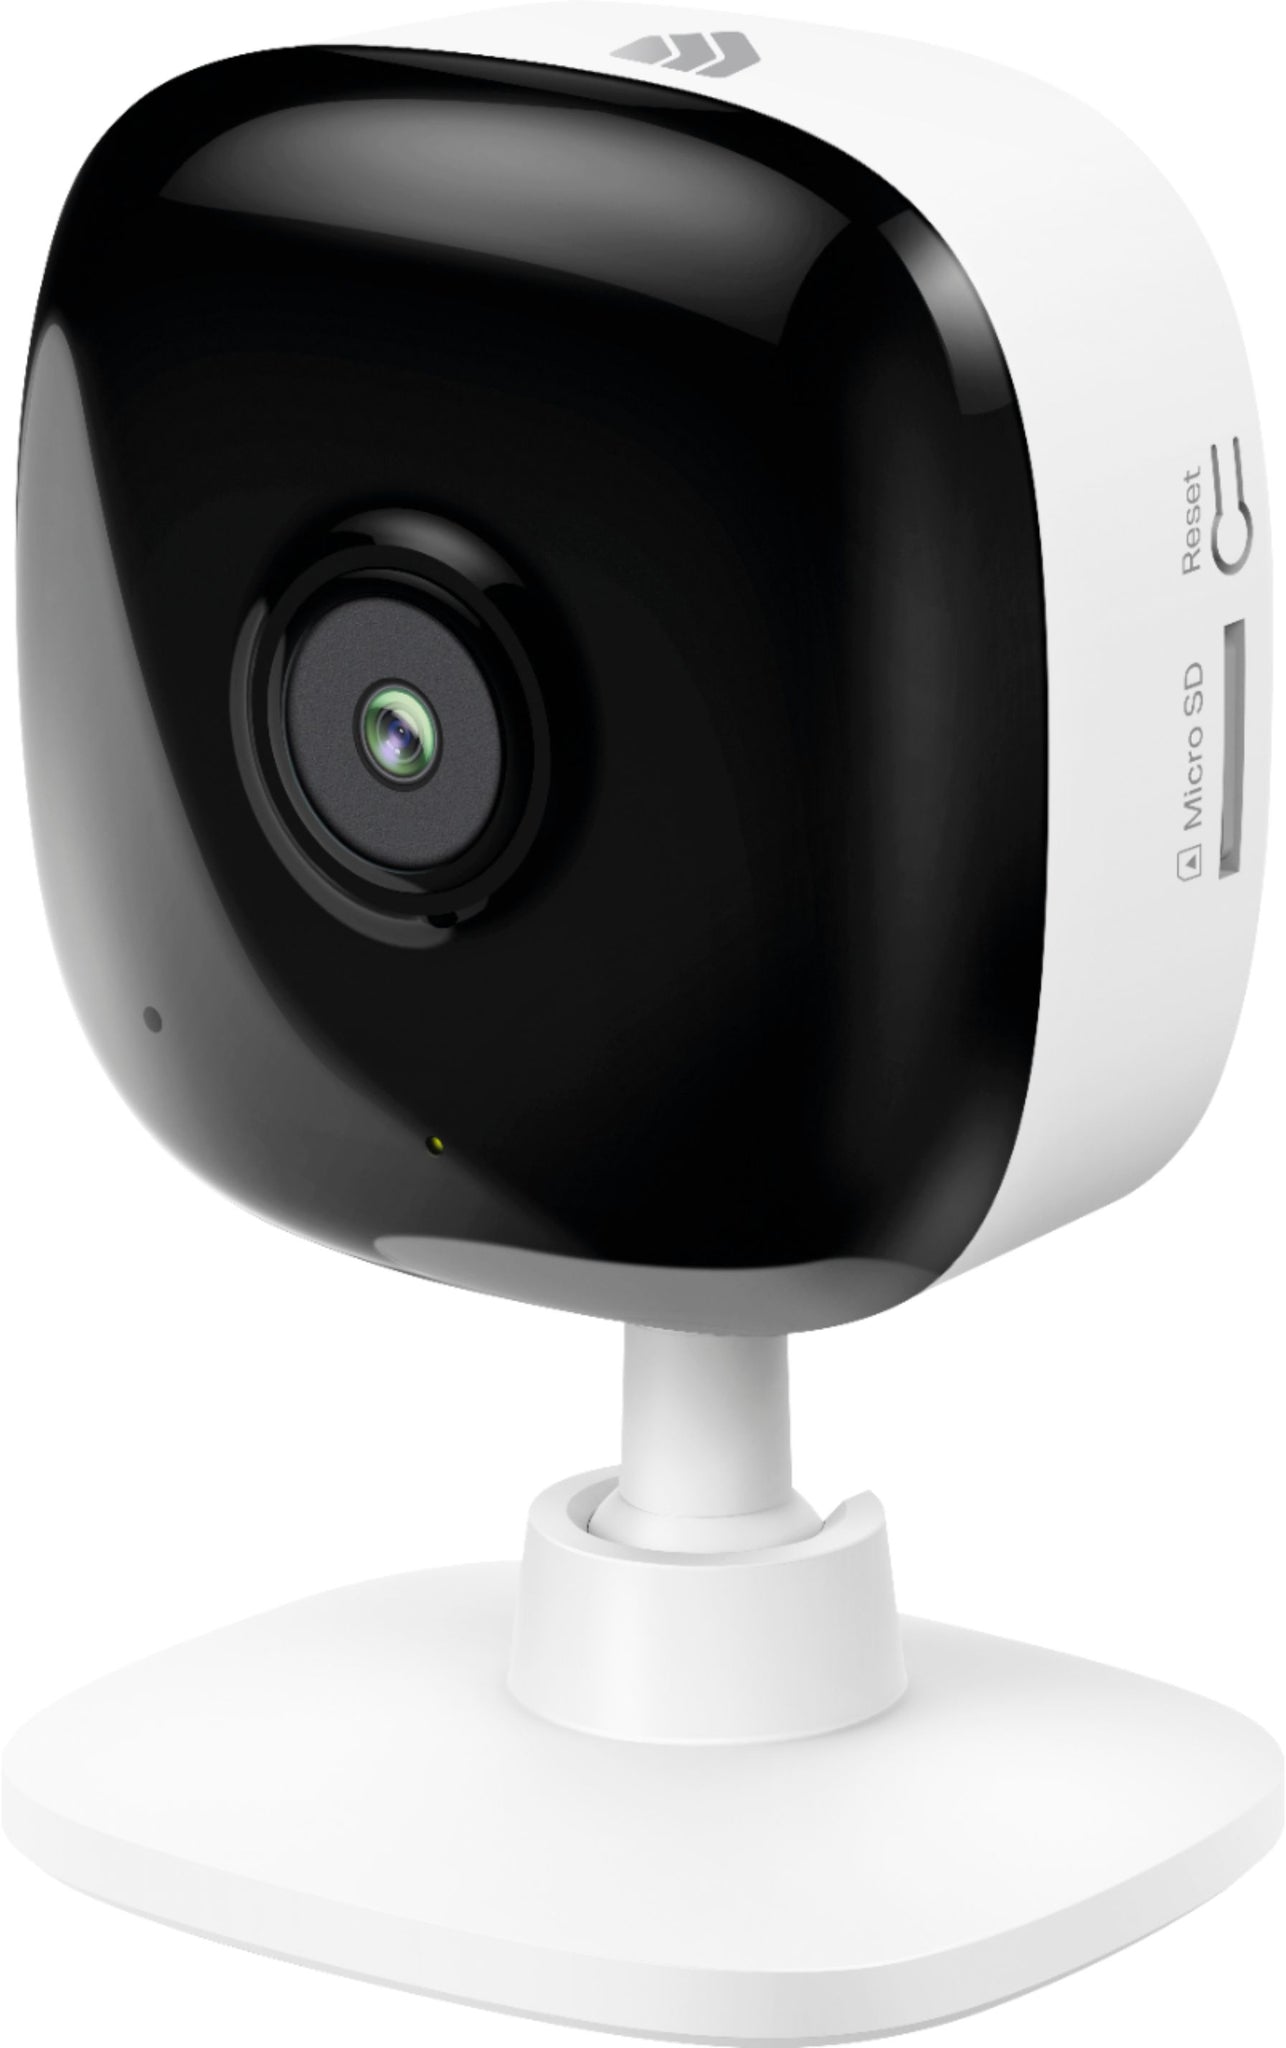 TP-Link - Kasa Spot Indoor 1080p Wi-Fi Wireless Network Surveillance Camera - Black/White